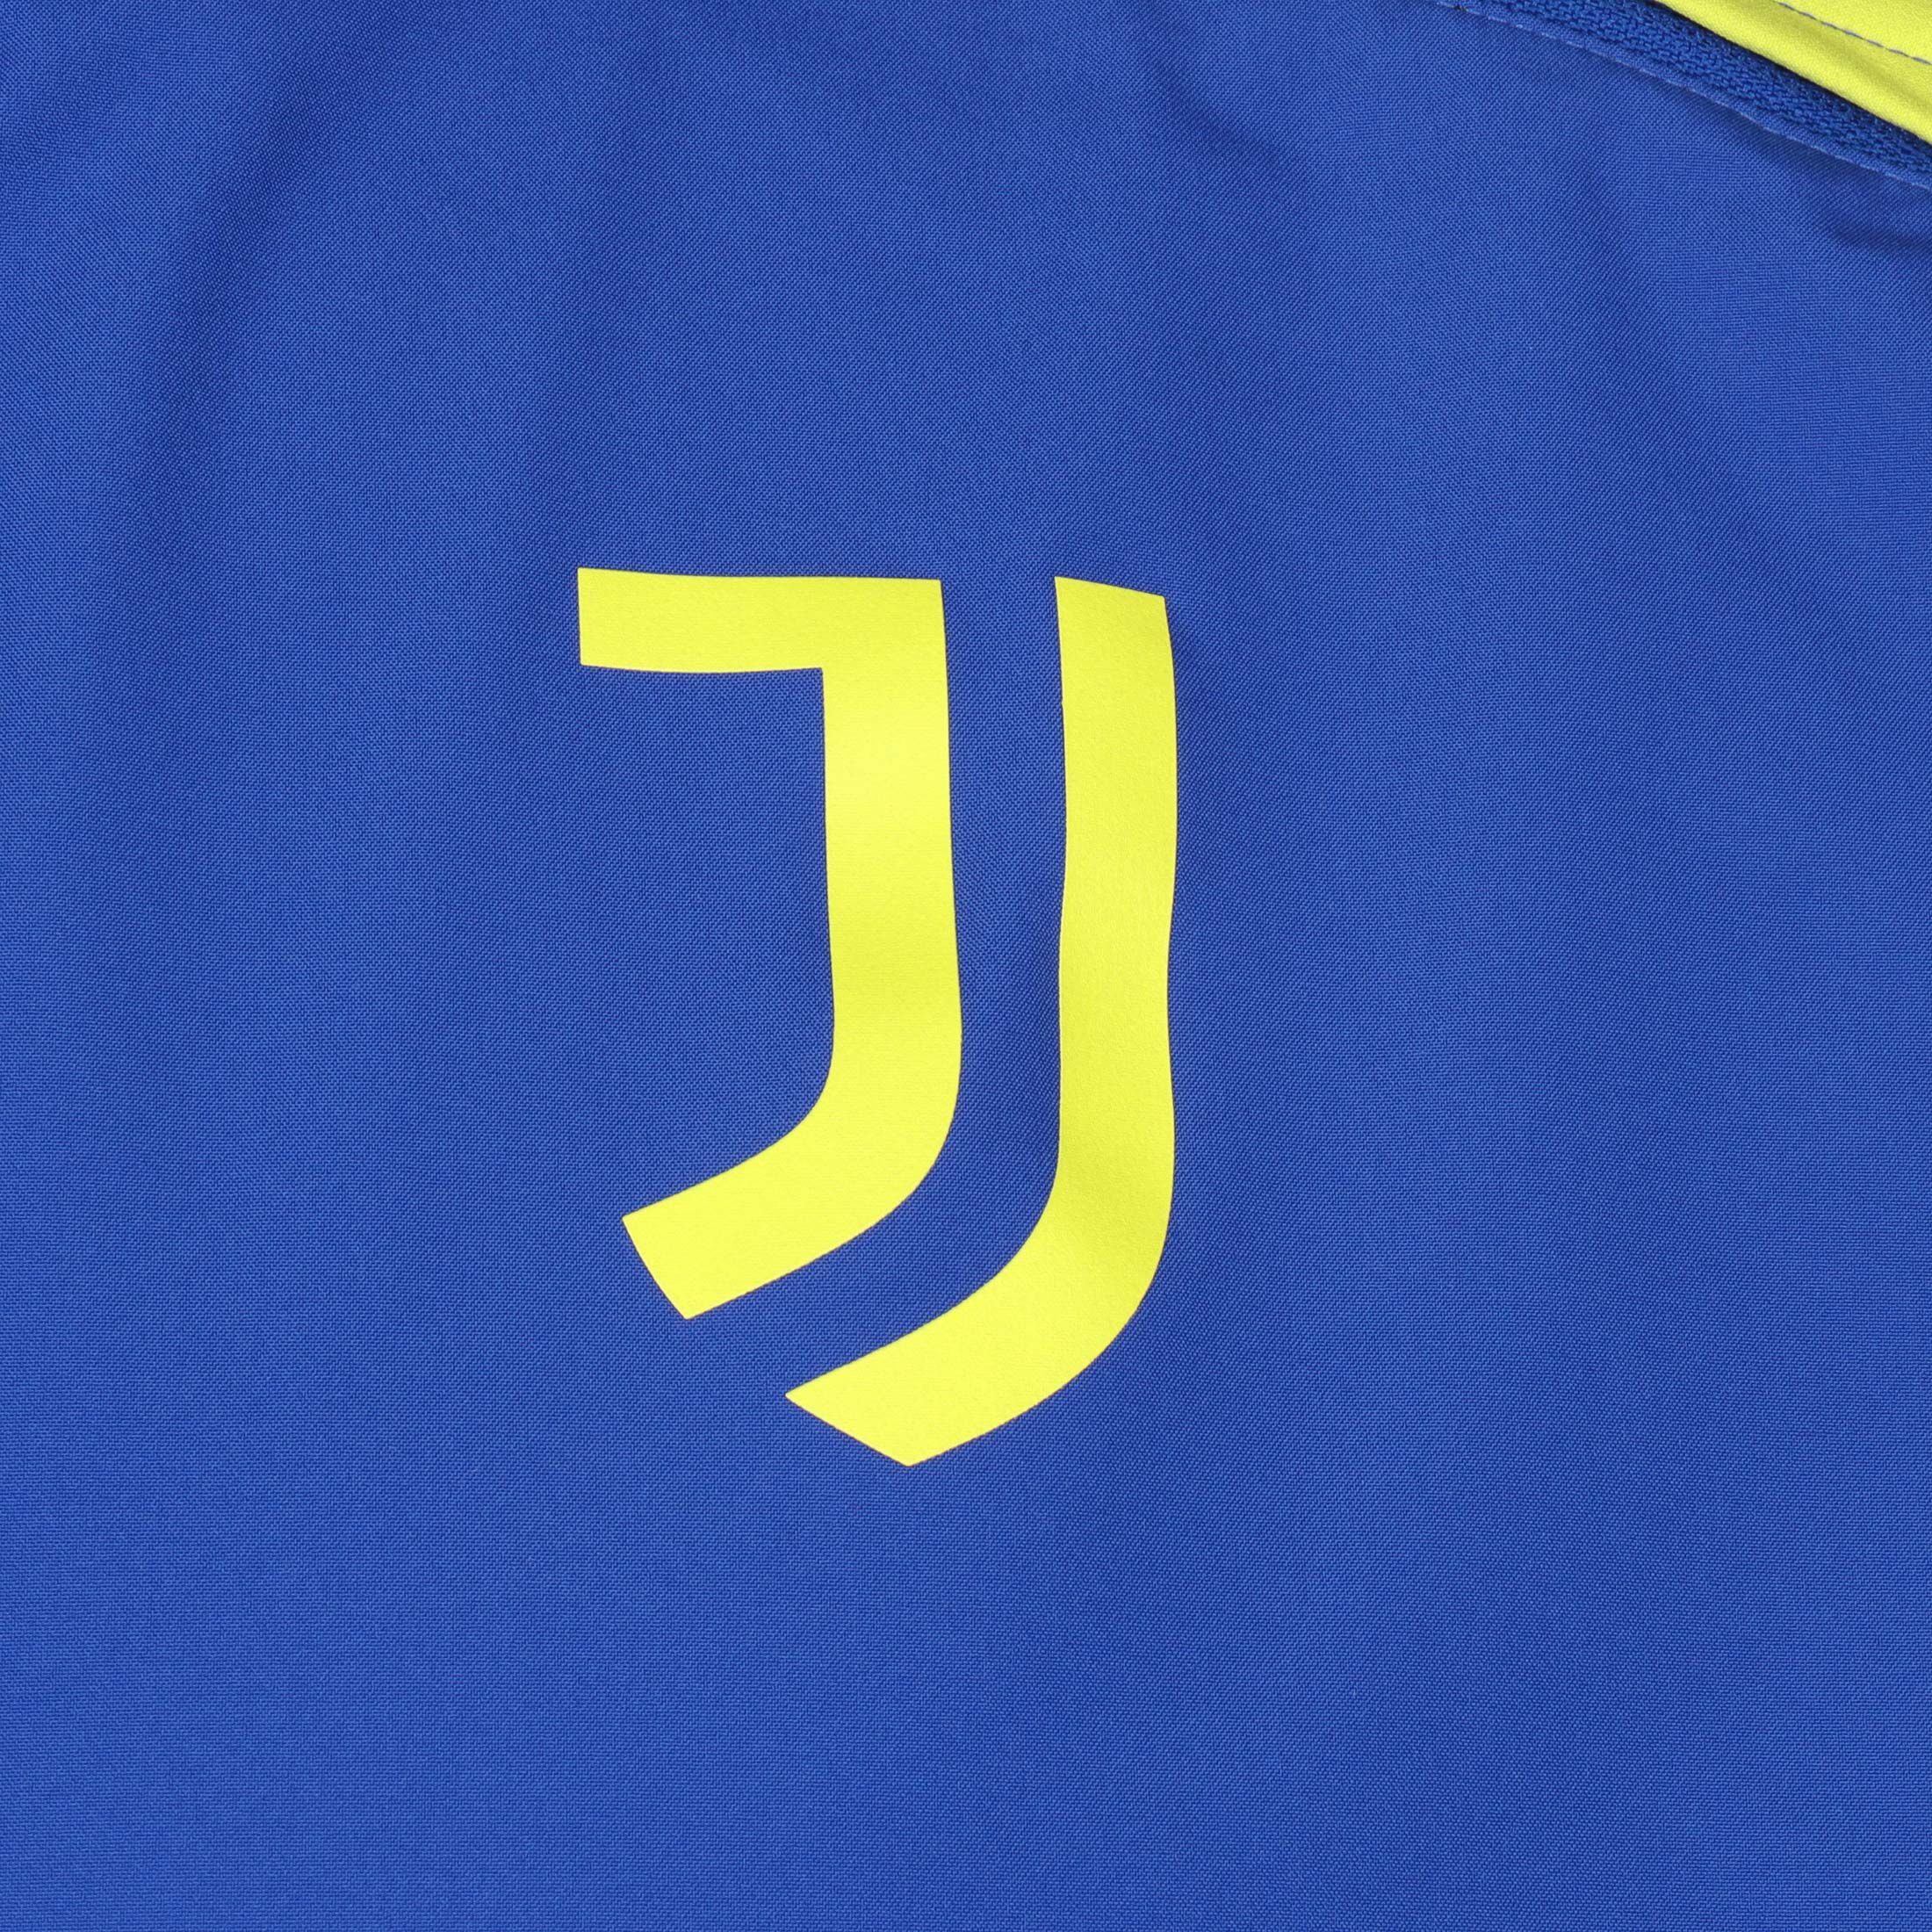 Hybrid Turin Herren Juventus Trainingssweat adidas Performance Sweatshirt